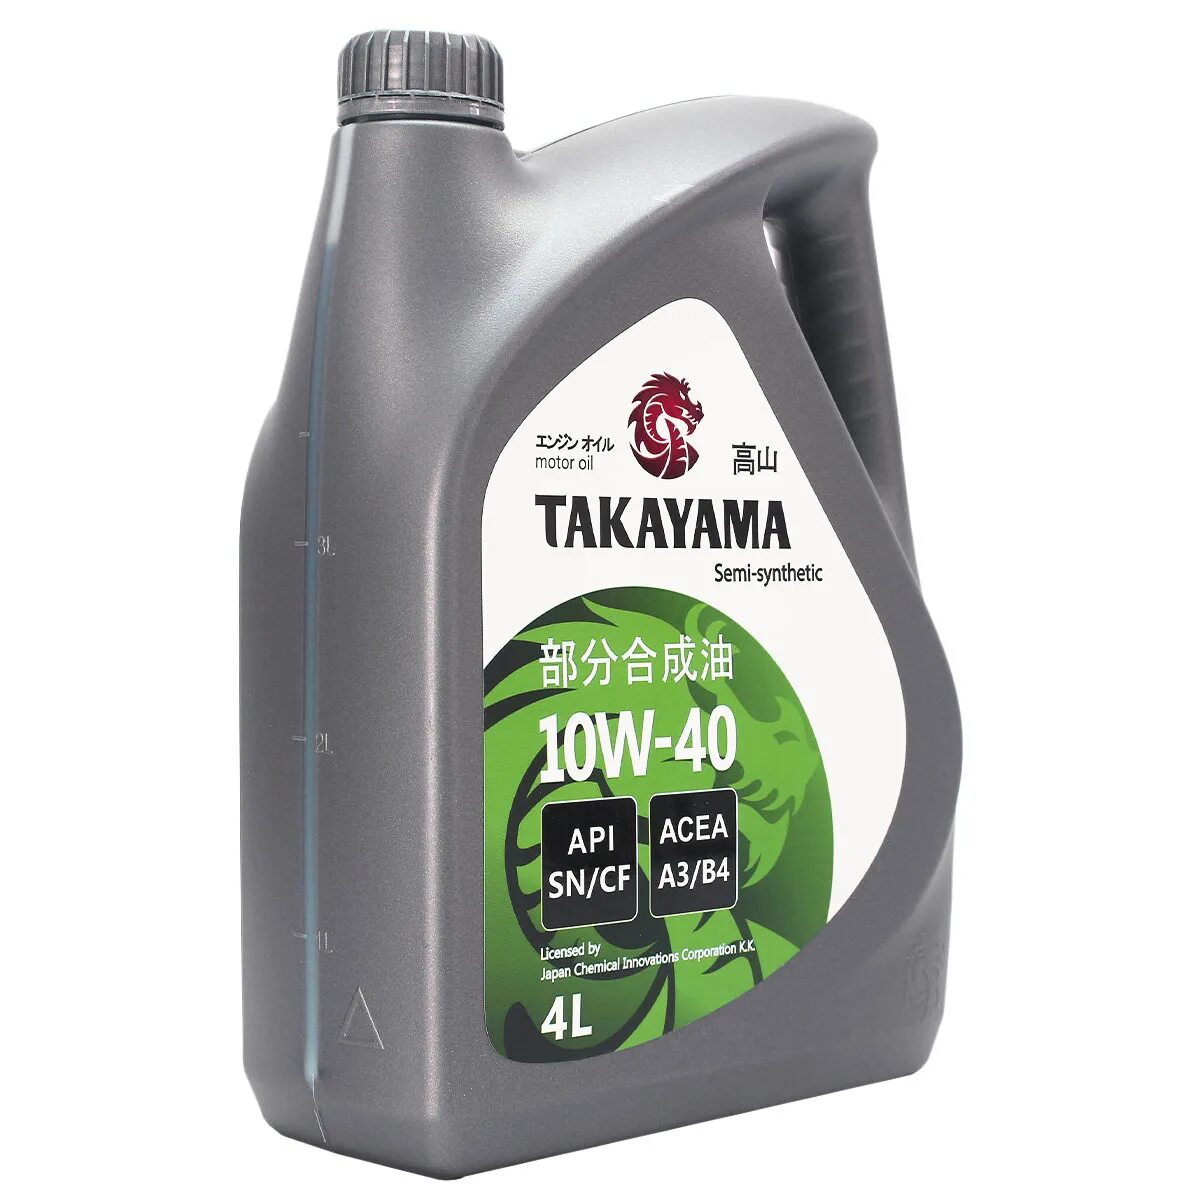 Масло такаяма 10w. Масло моторное Takayama 10w-40 API SN/CF 4л (пластик). Масло Такаяма 10w 40. Масло Такаяма 10w 40 отзывы. Takayama 10w 40 полусинтетика отзывы.